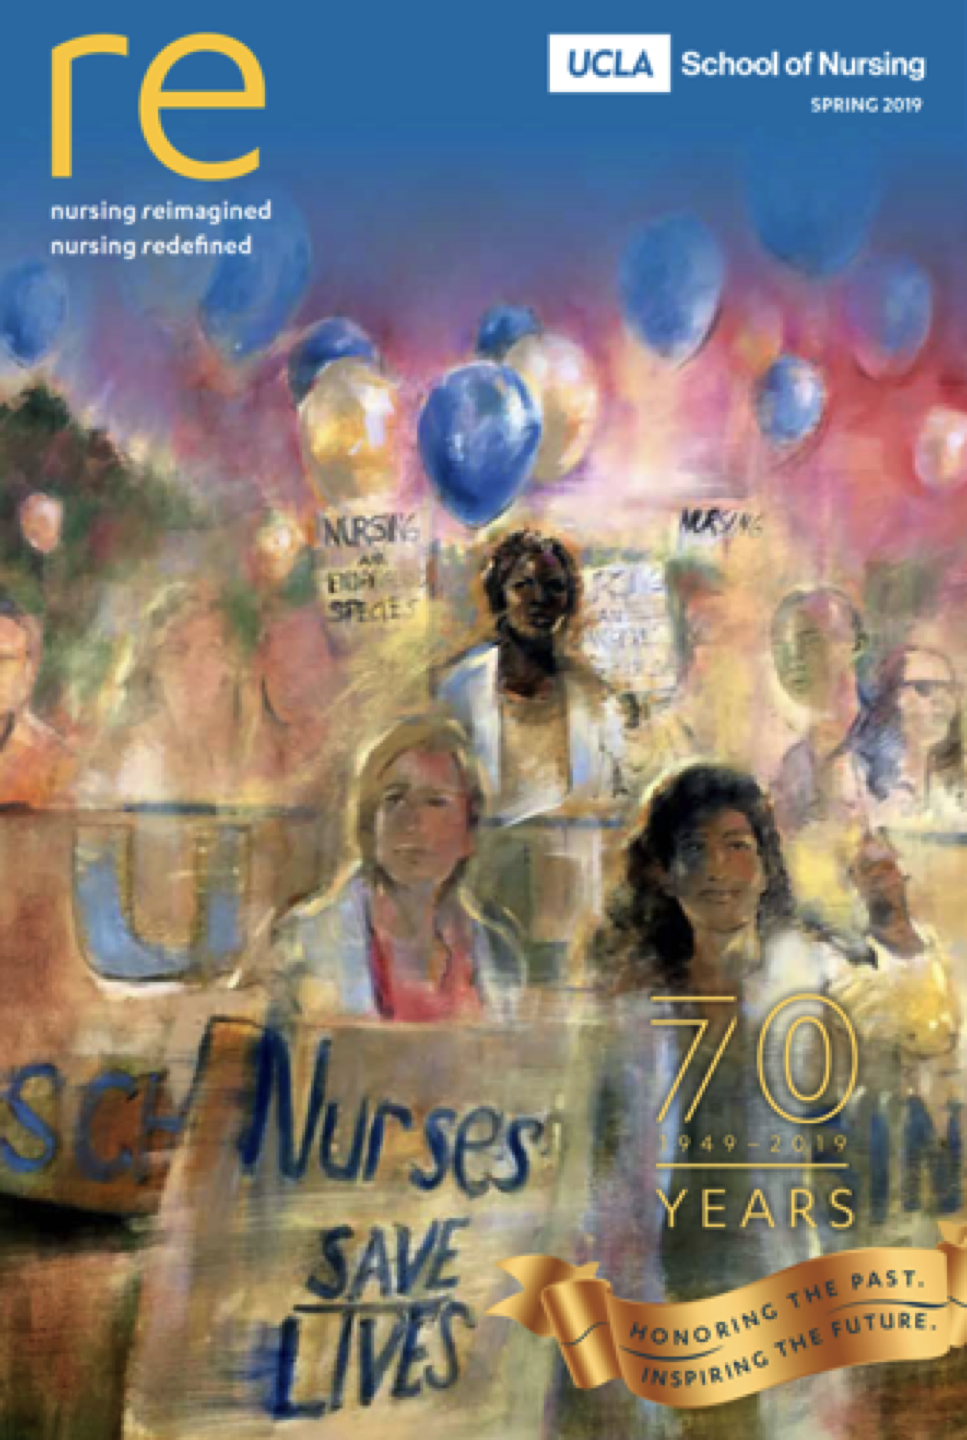 Gregg Chadwick's Nurses Save Lives on the Cover of Nursing ReImagined Journal
UCLA School of Nursing - Spring 2019